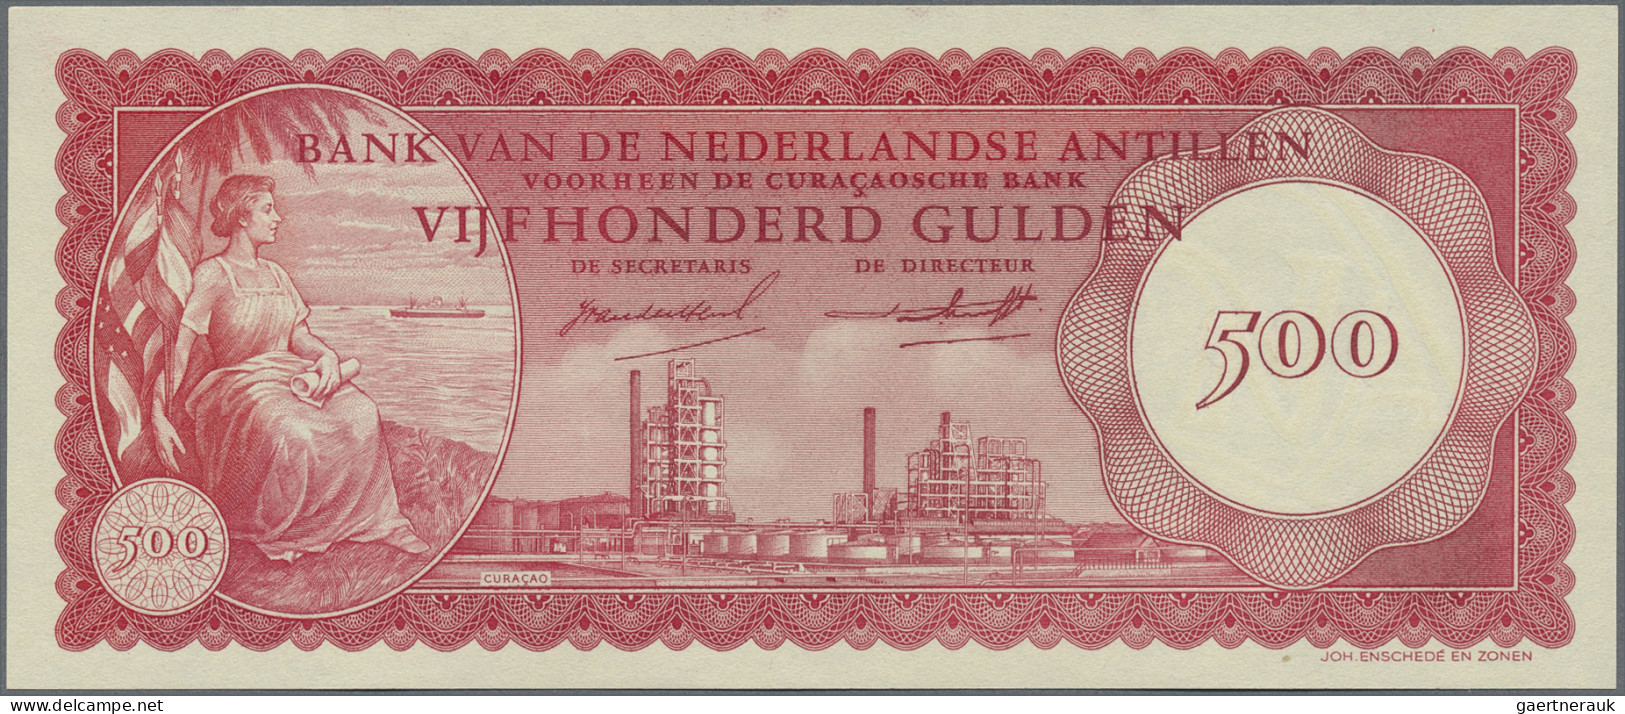 Netherlands Antilles: Bank Van De Nederlandse Antillen, 500 Gulden 1962, P.7 In - Netherlands Antilles (...-1986)